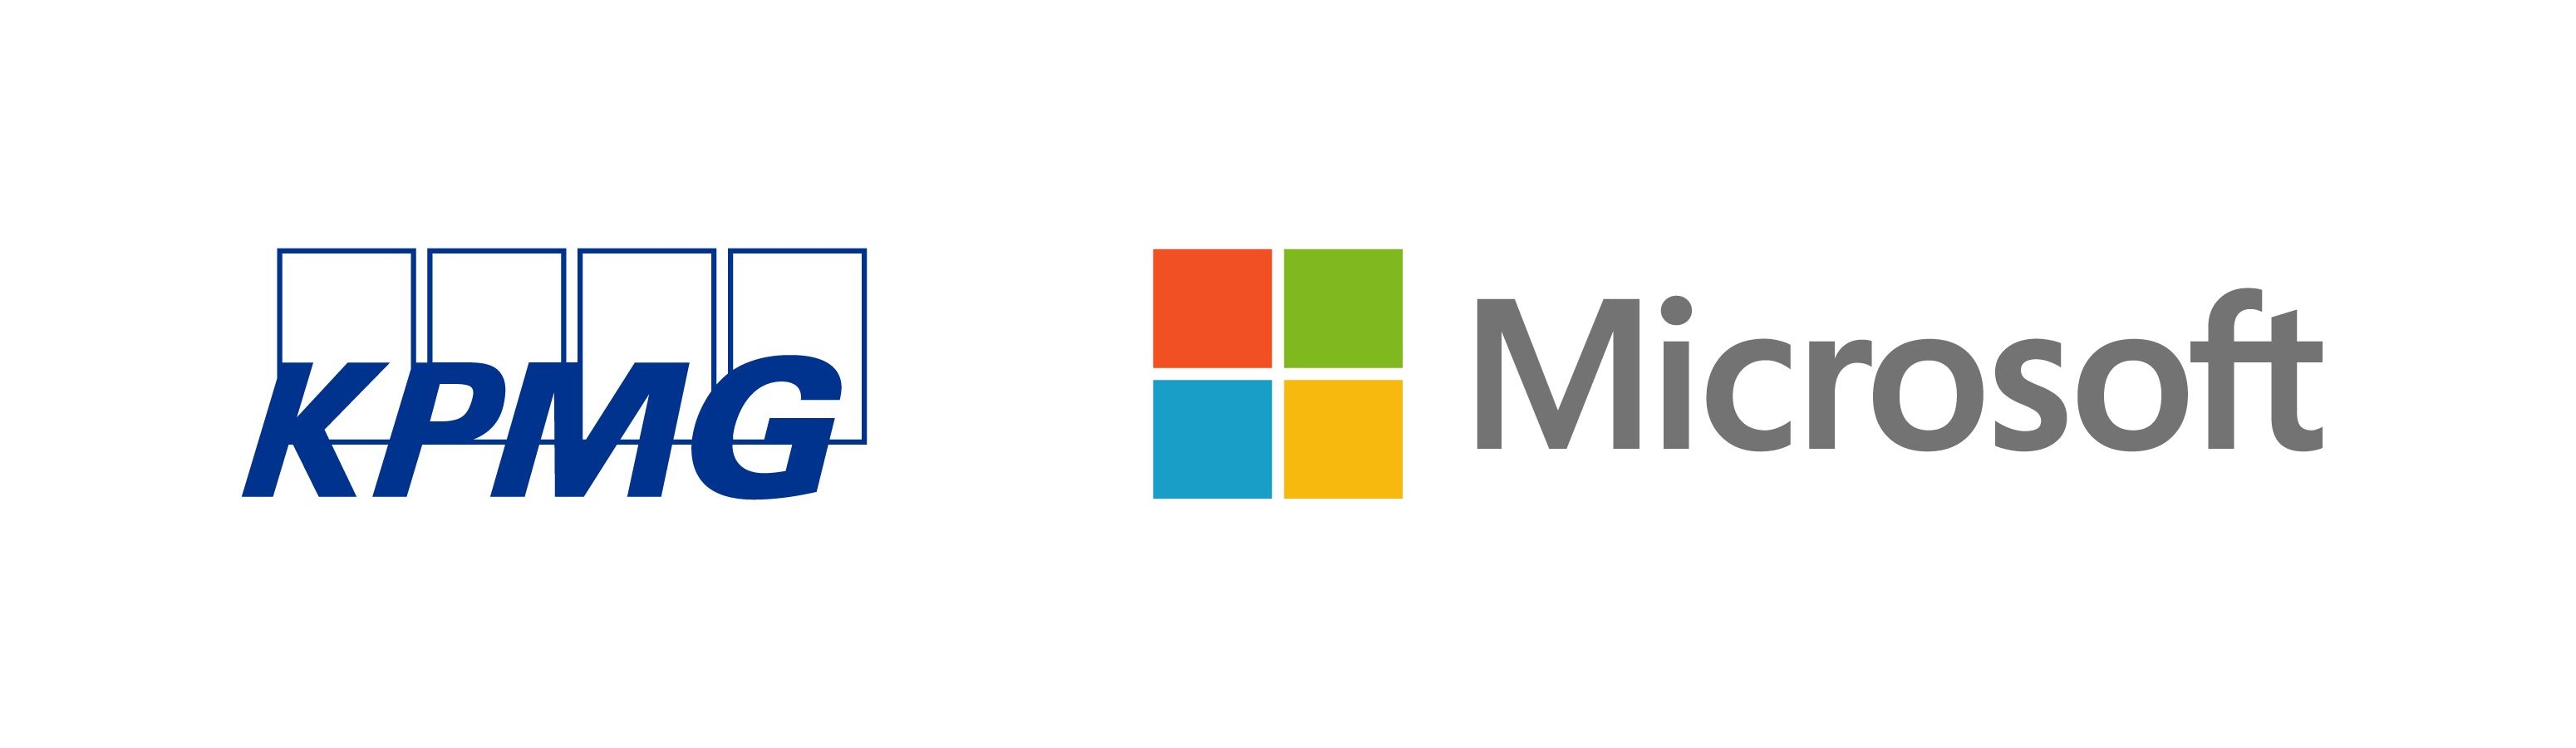 KPMG, Microsoft - logo